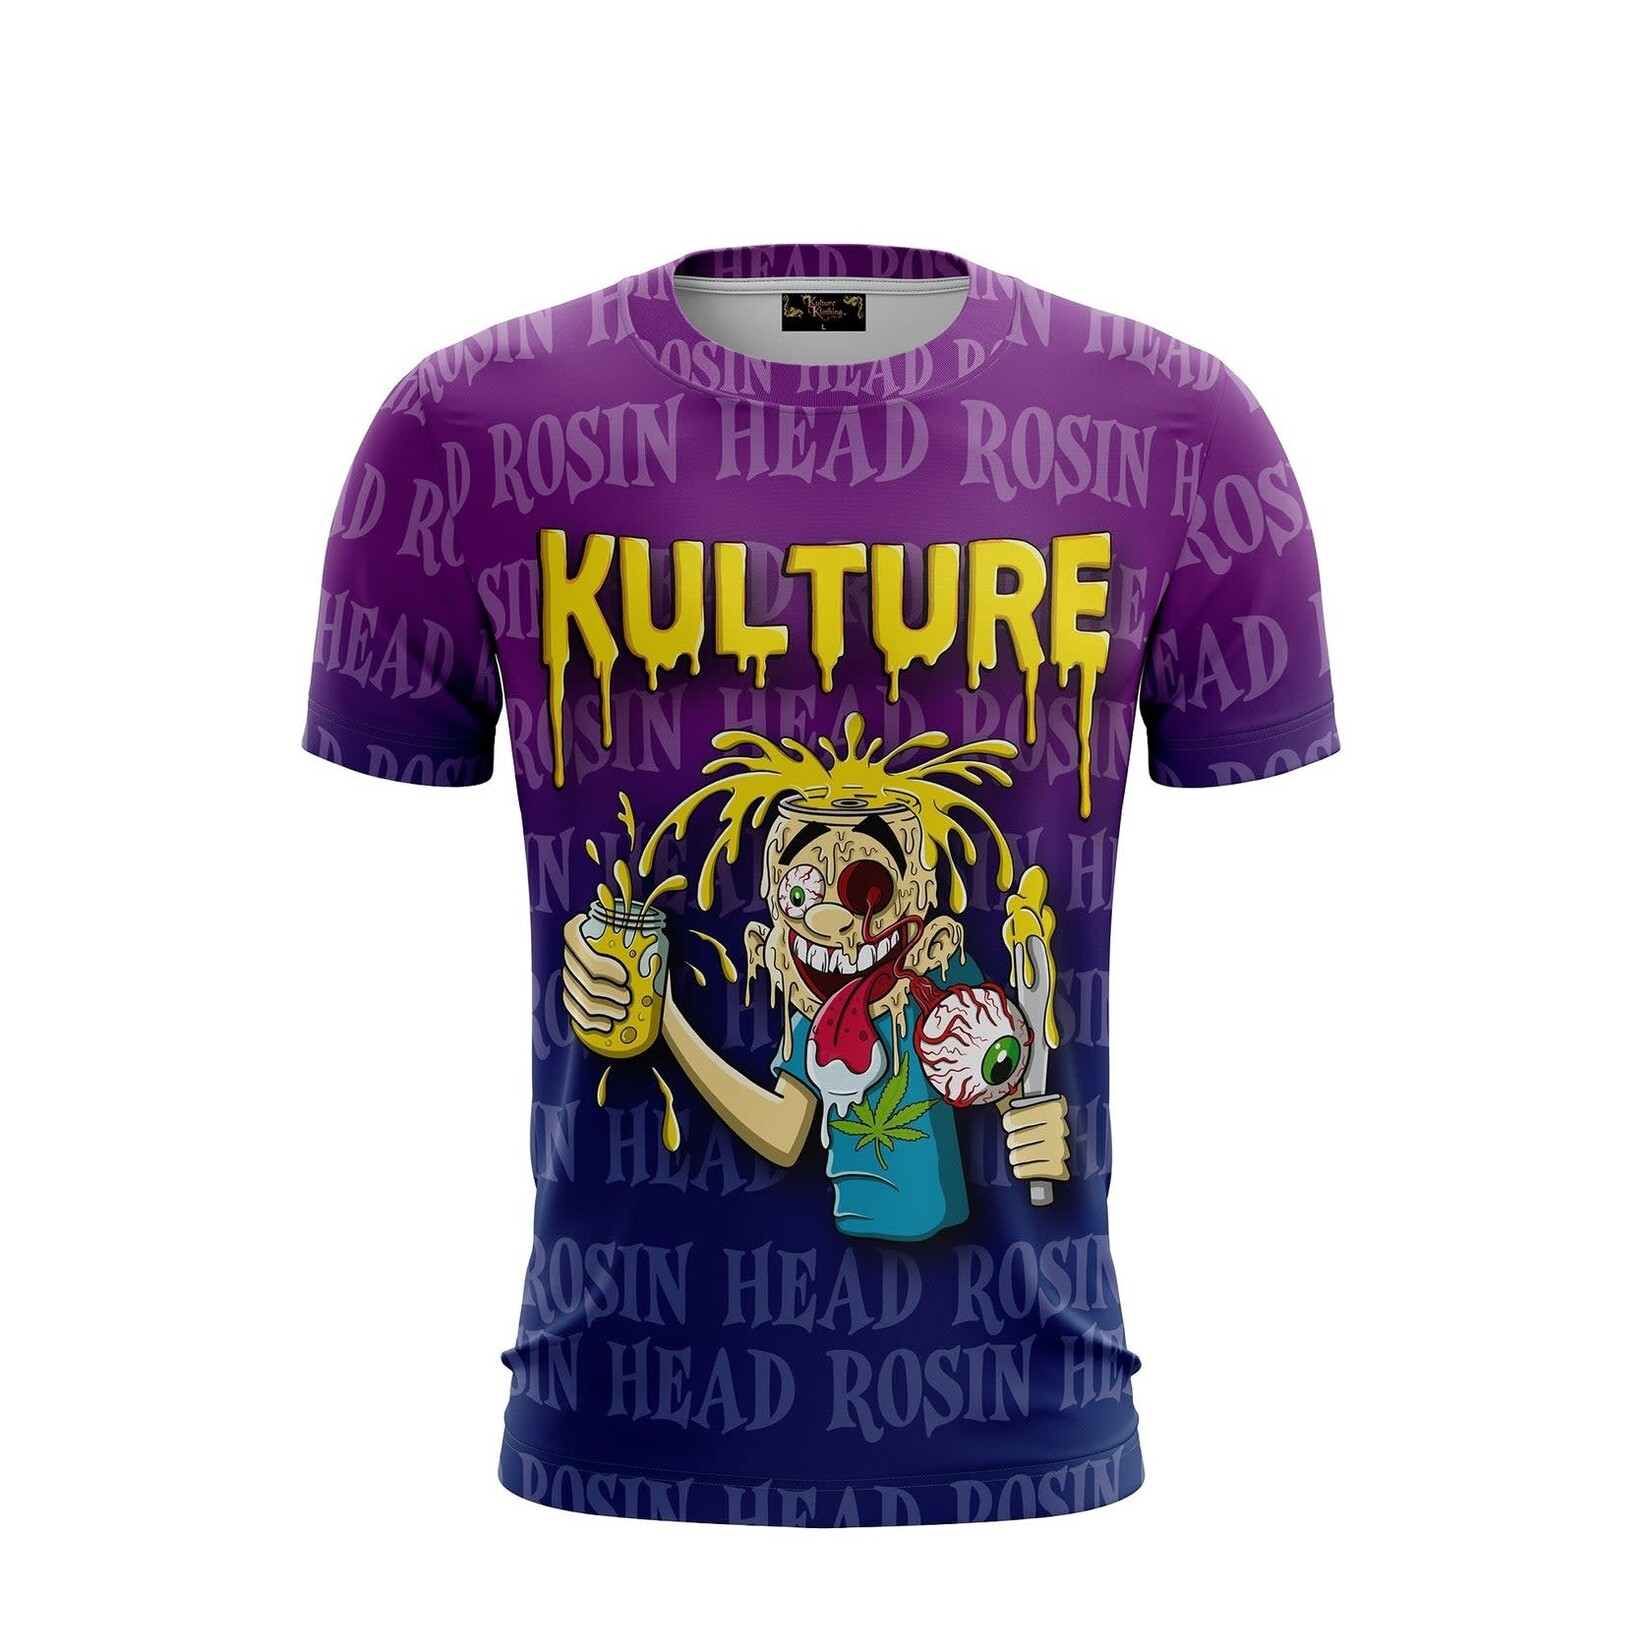 Kulture Klothing Club Rosin Head | T Shirt